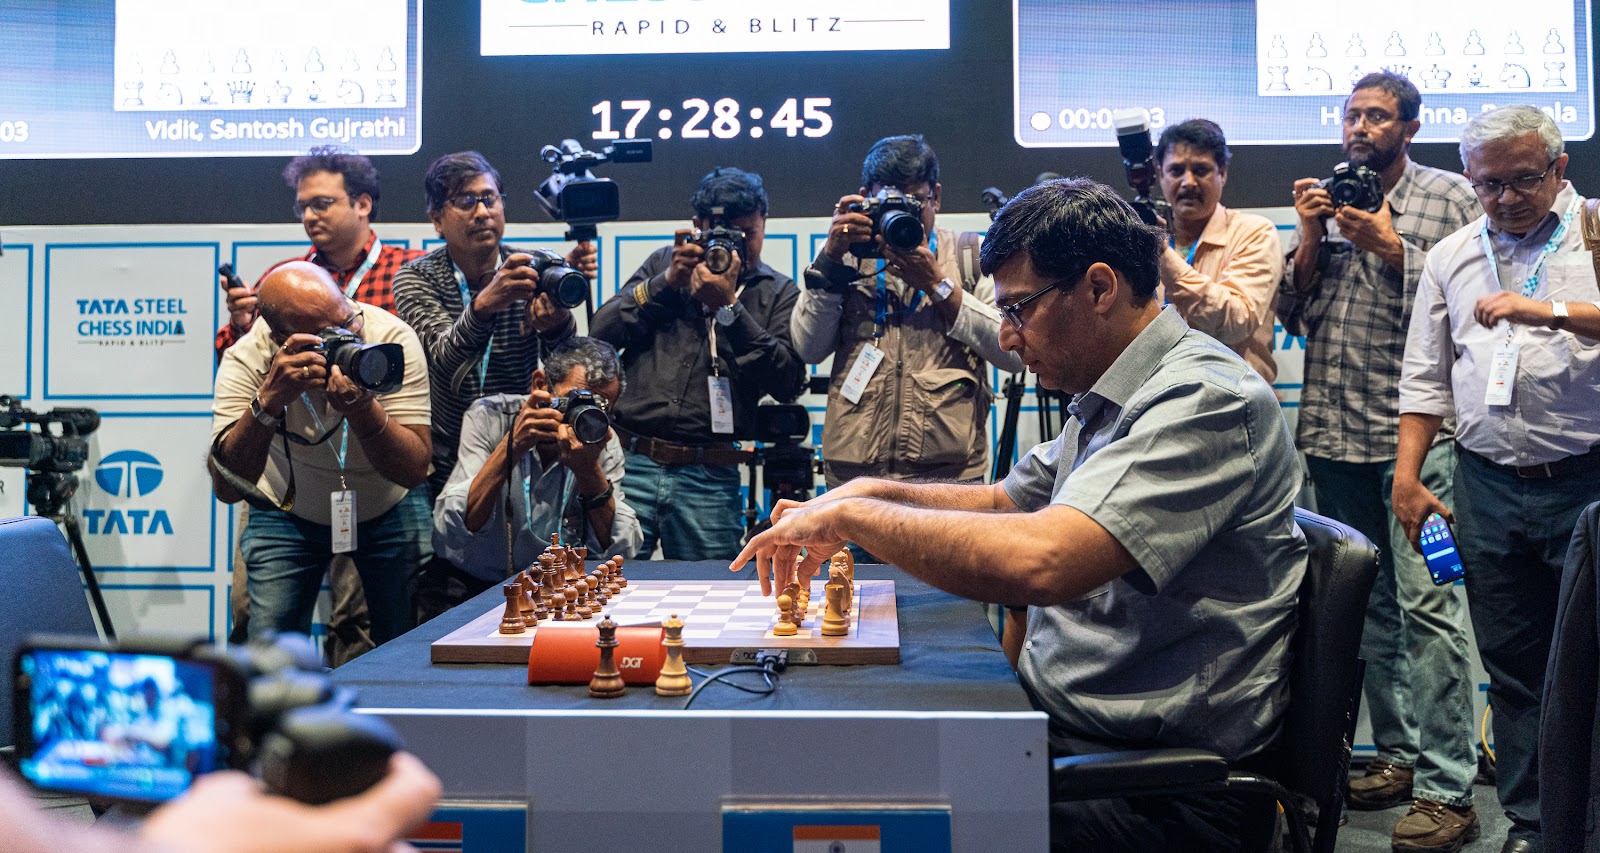 Tata Steel Chess INDIA, rapid & blitz 2023